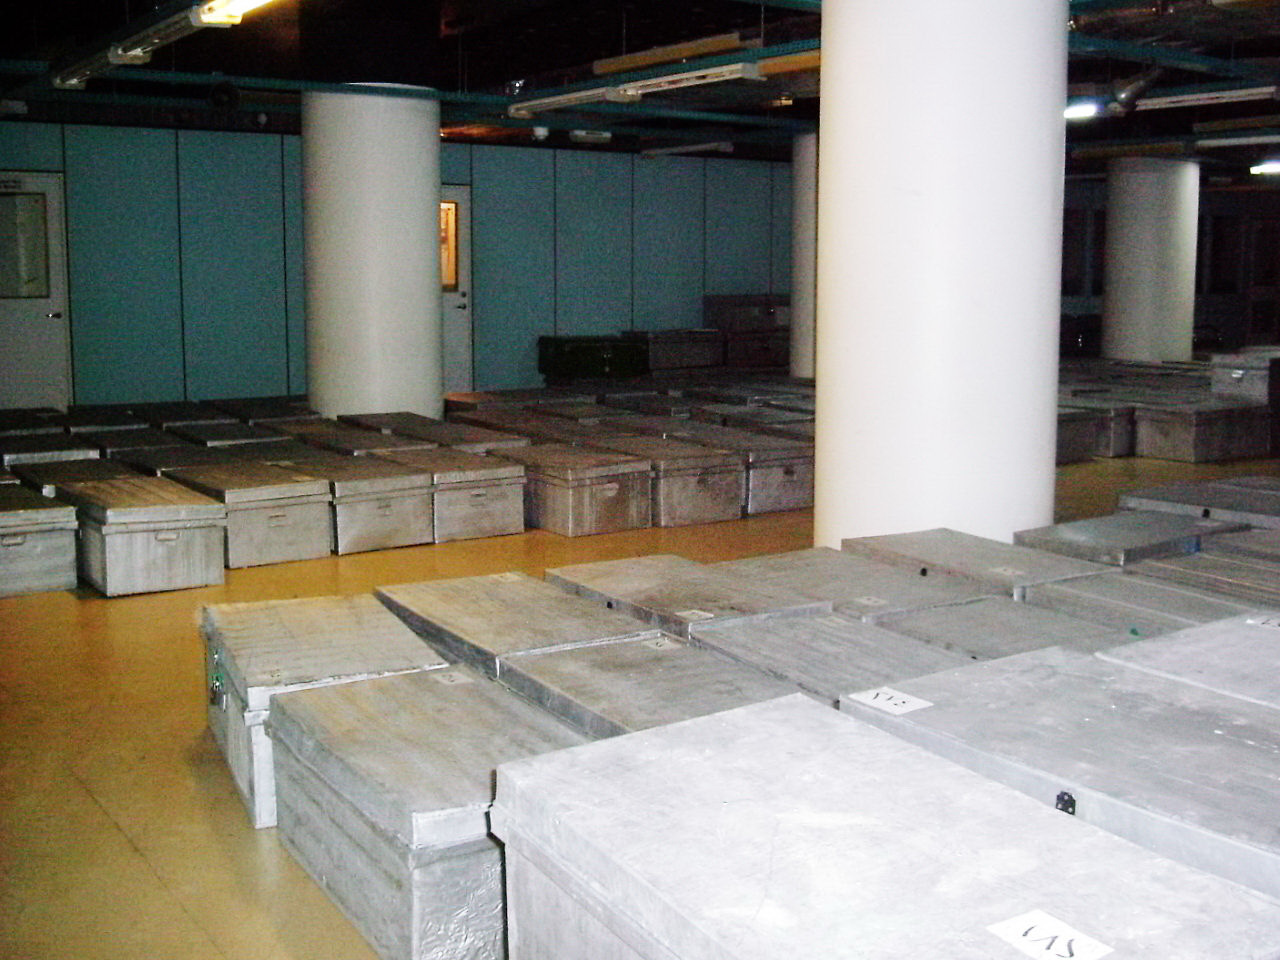 Aluminum boxes housing Islamic manuscripts in bomb-shelter